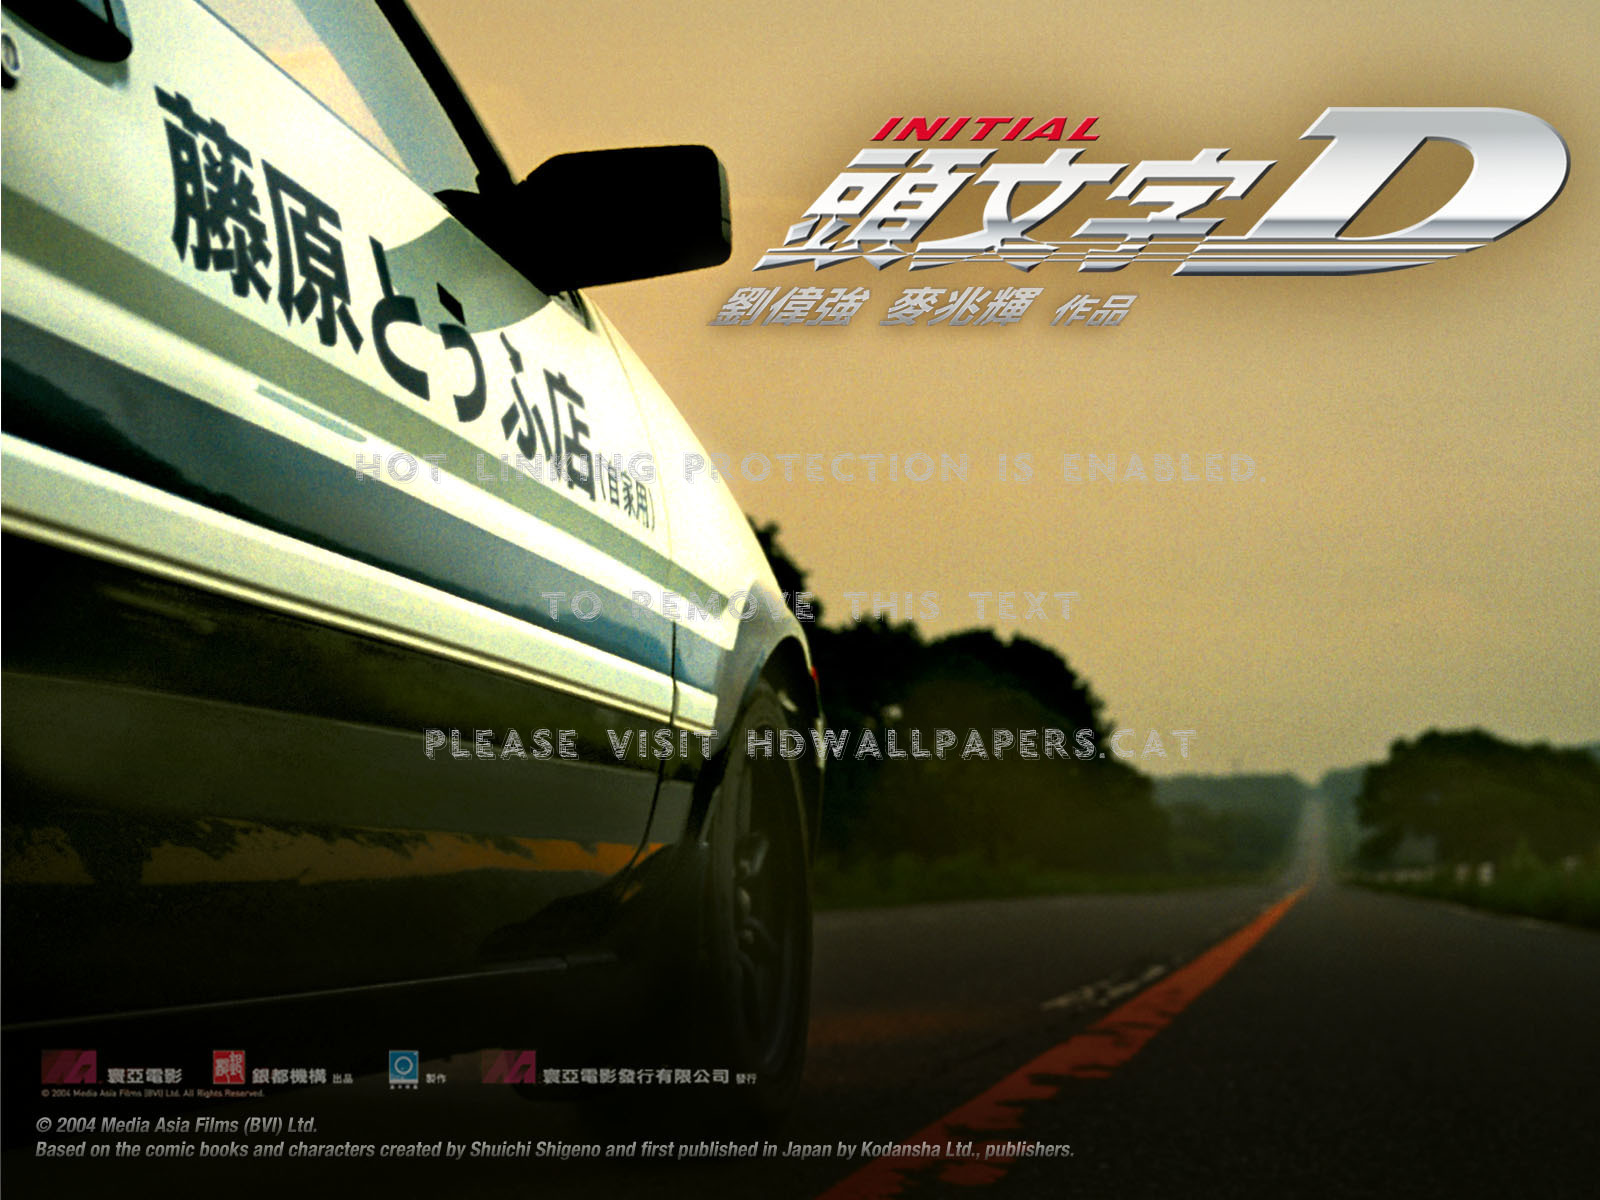 Hachi-roku Initial D Takumi Autos Toyota - Initial D Movie Poster , HD Wallpaper & Backgrounds